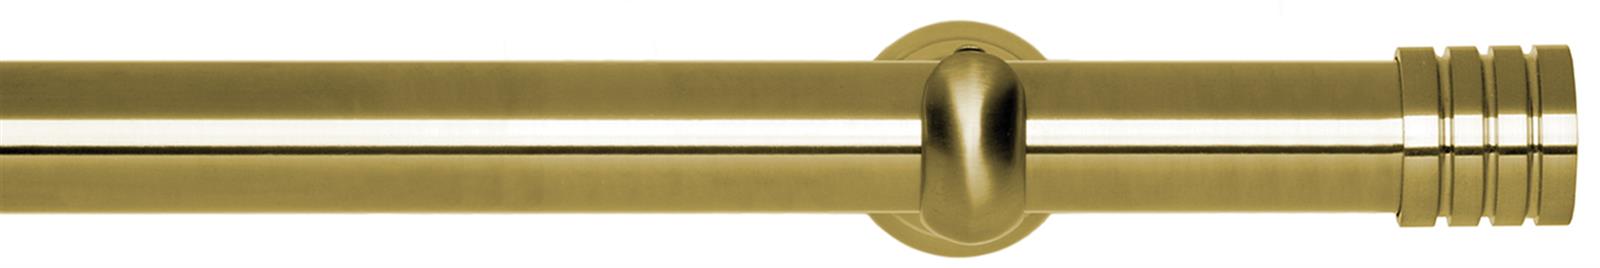 Neo 28mm Eyelet Pole Spun Brass Cup Stud